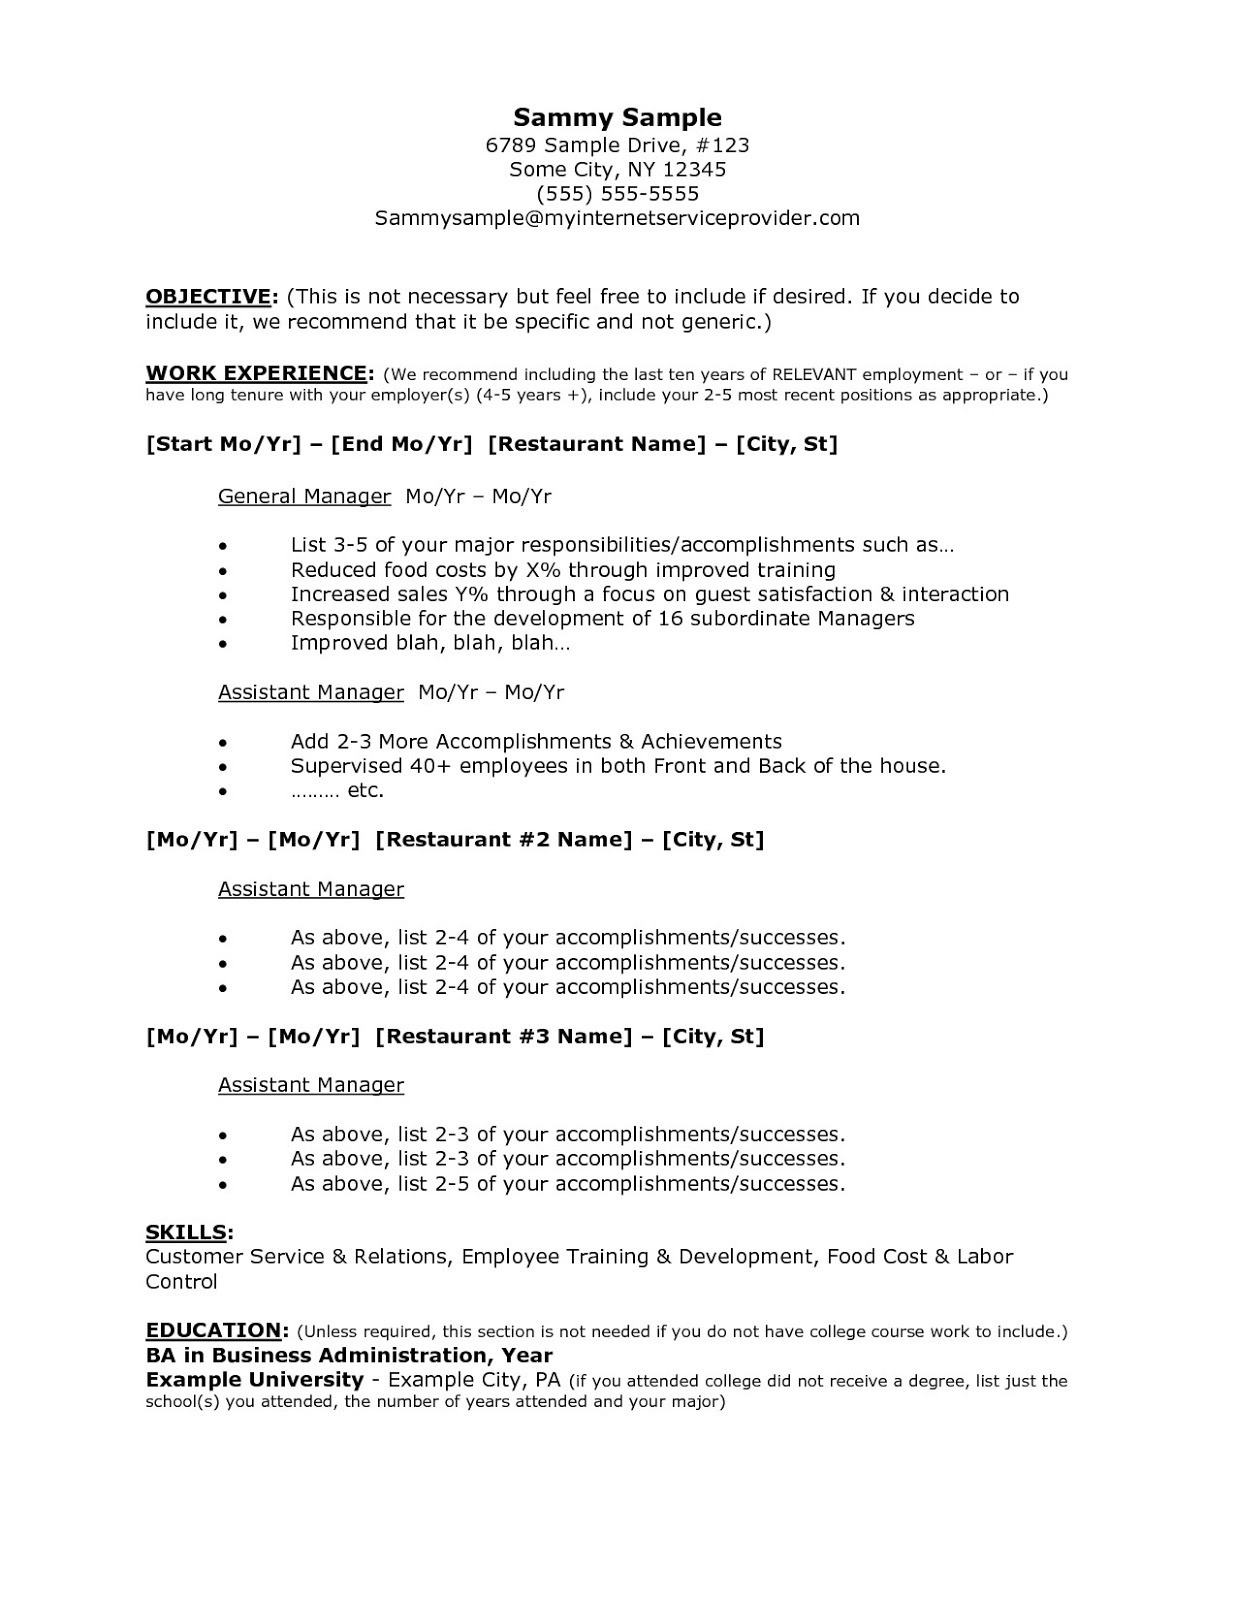 Sample resume groundskeeper position